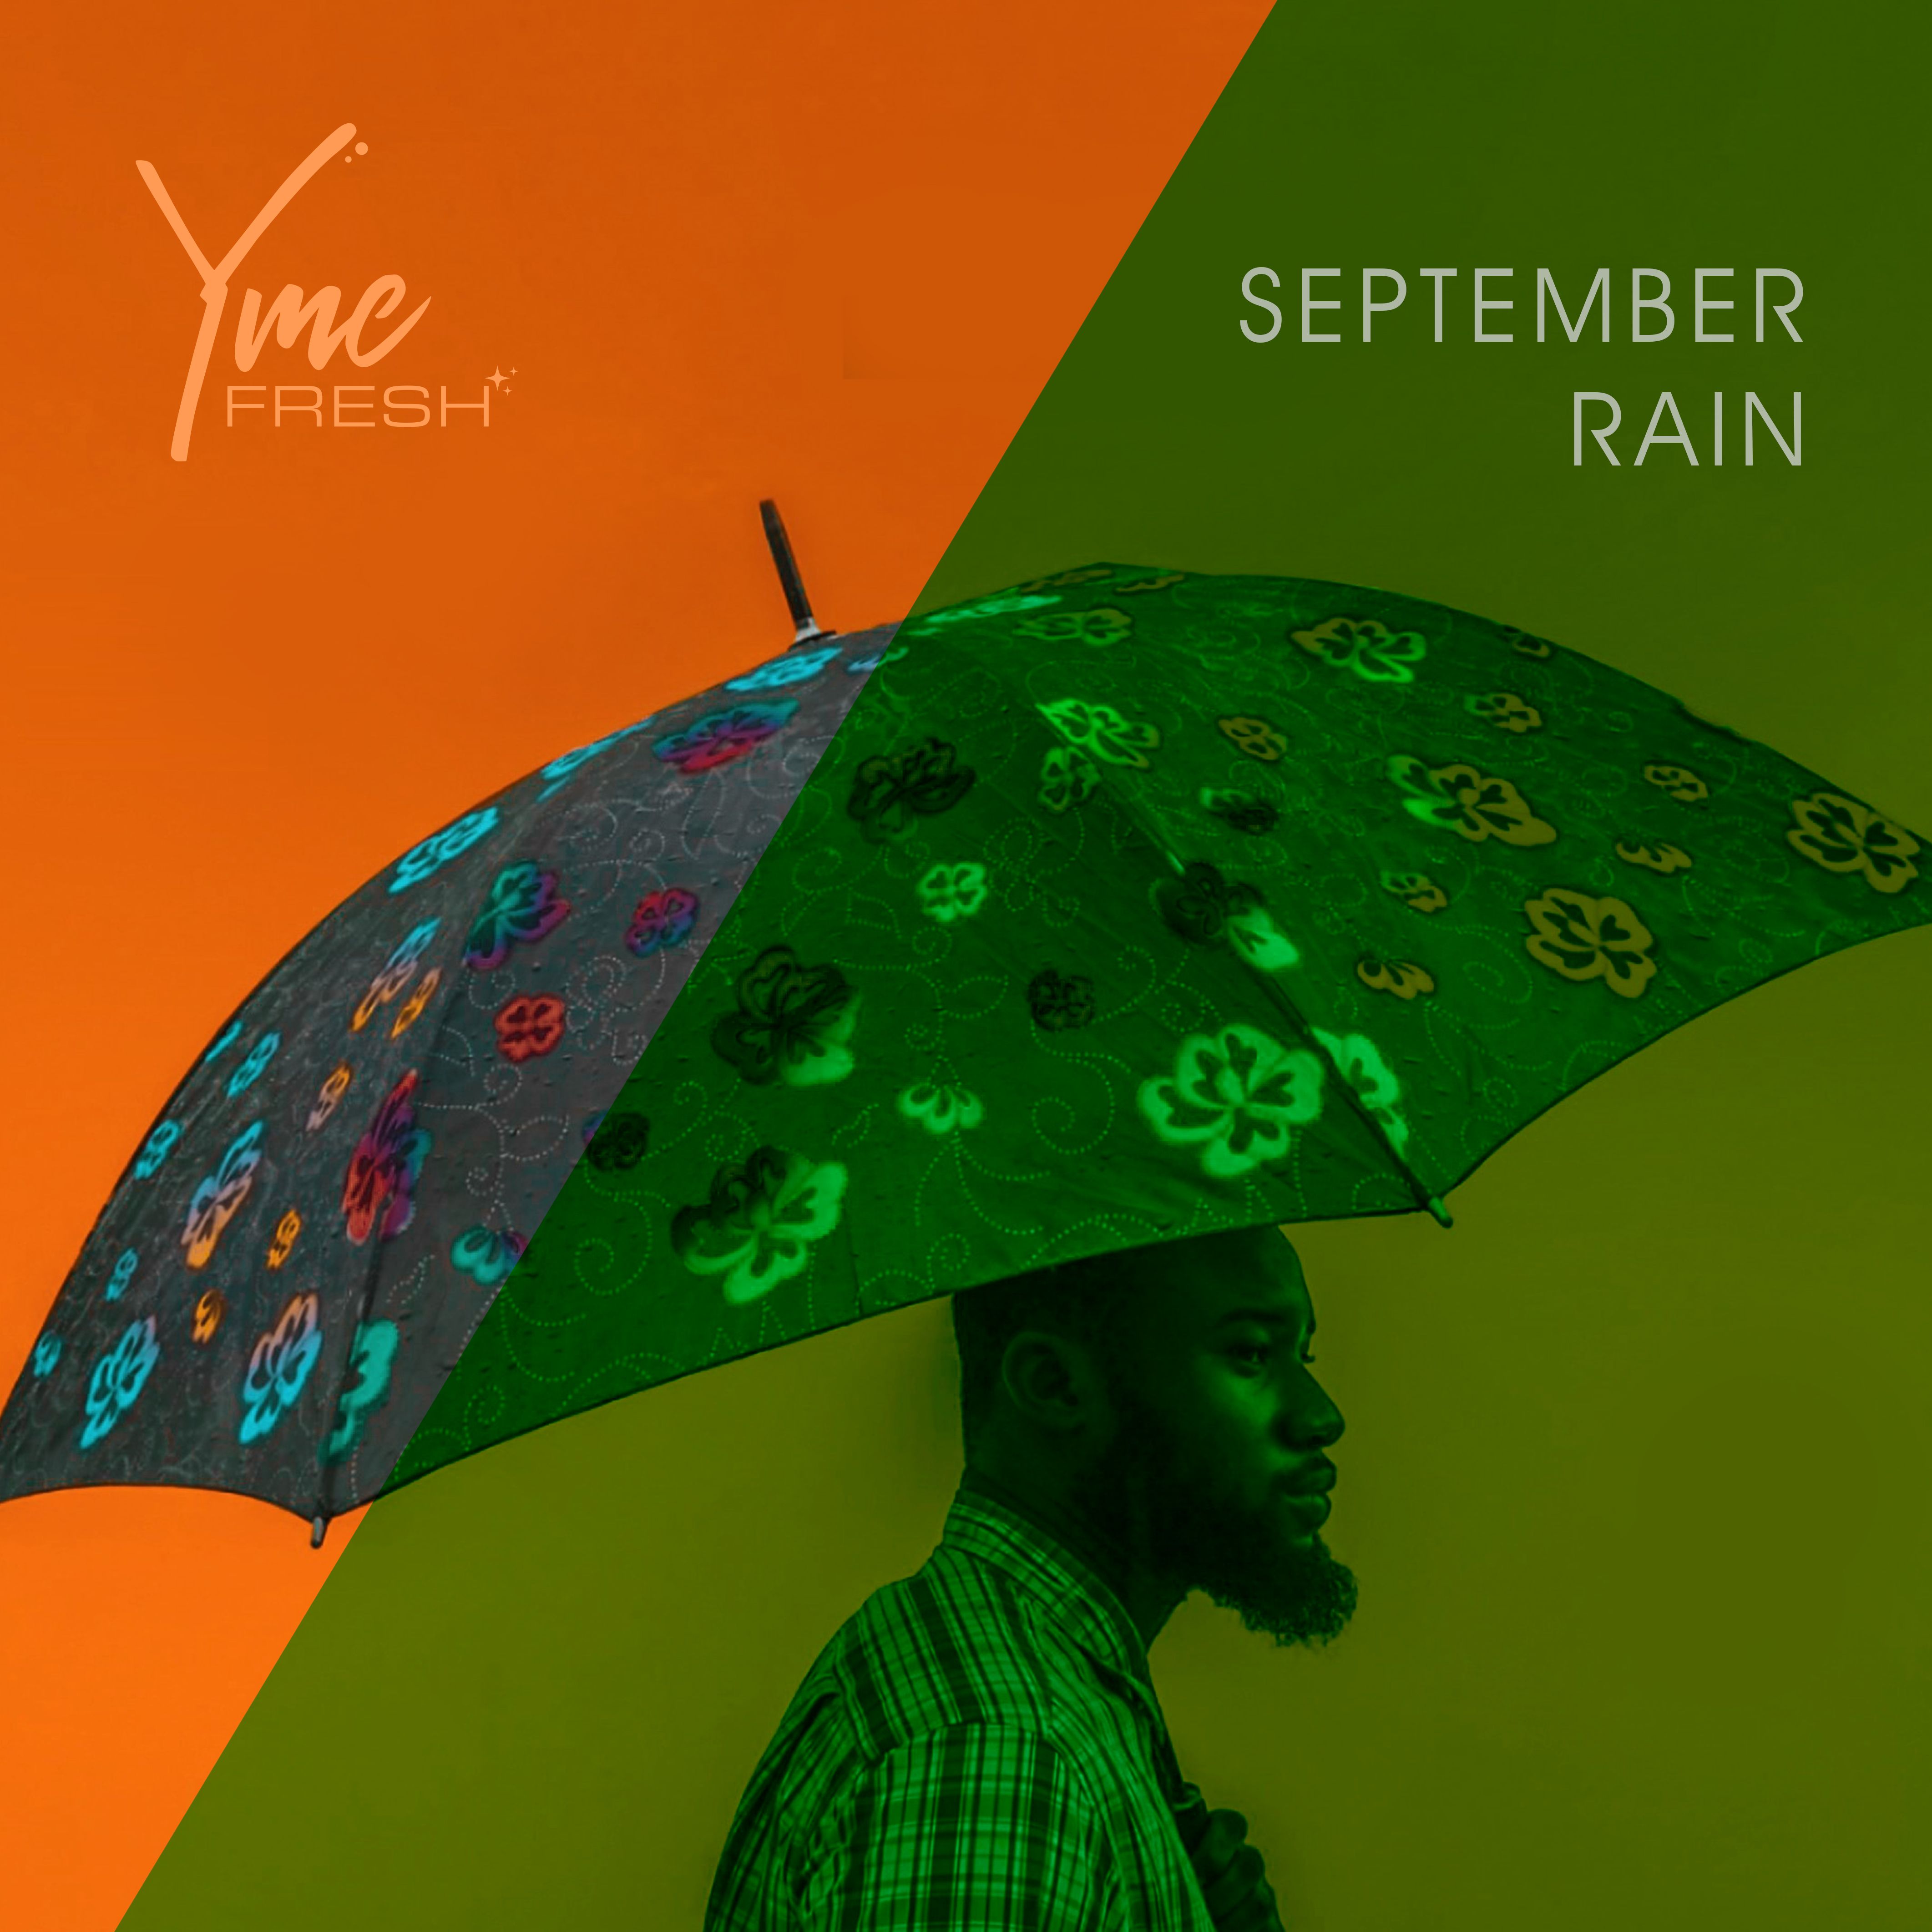 Download [No Copyright Music] "September Rain" Chill Lofi Hip Hop (Copyright Free) Chillhop for Youtube